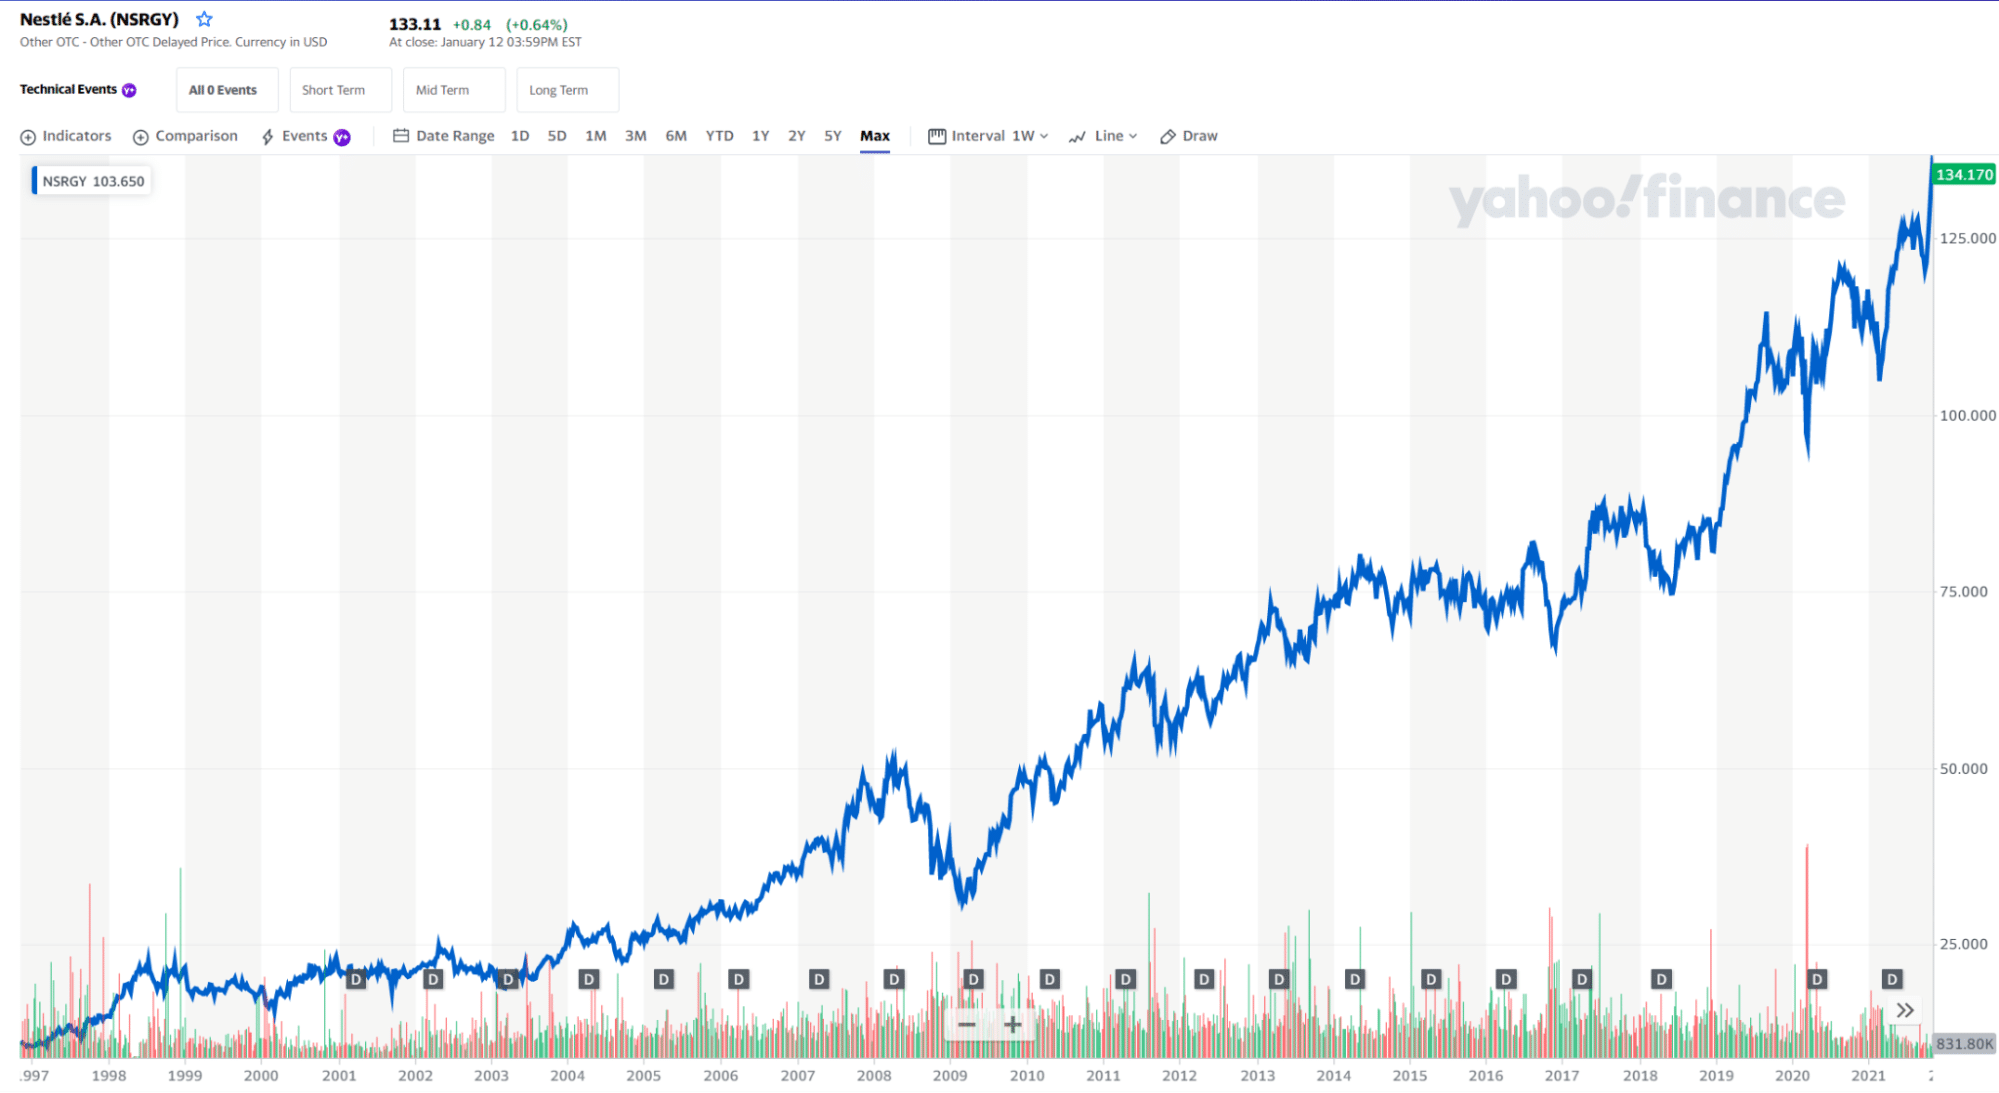 NSRGY stock price chart 1998-2022